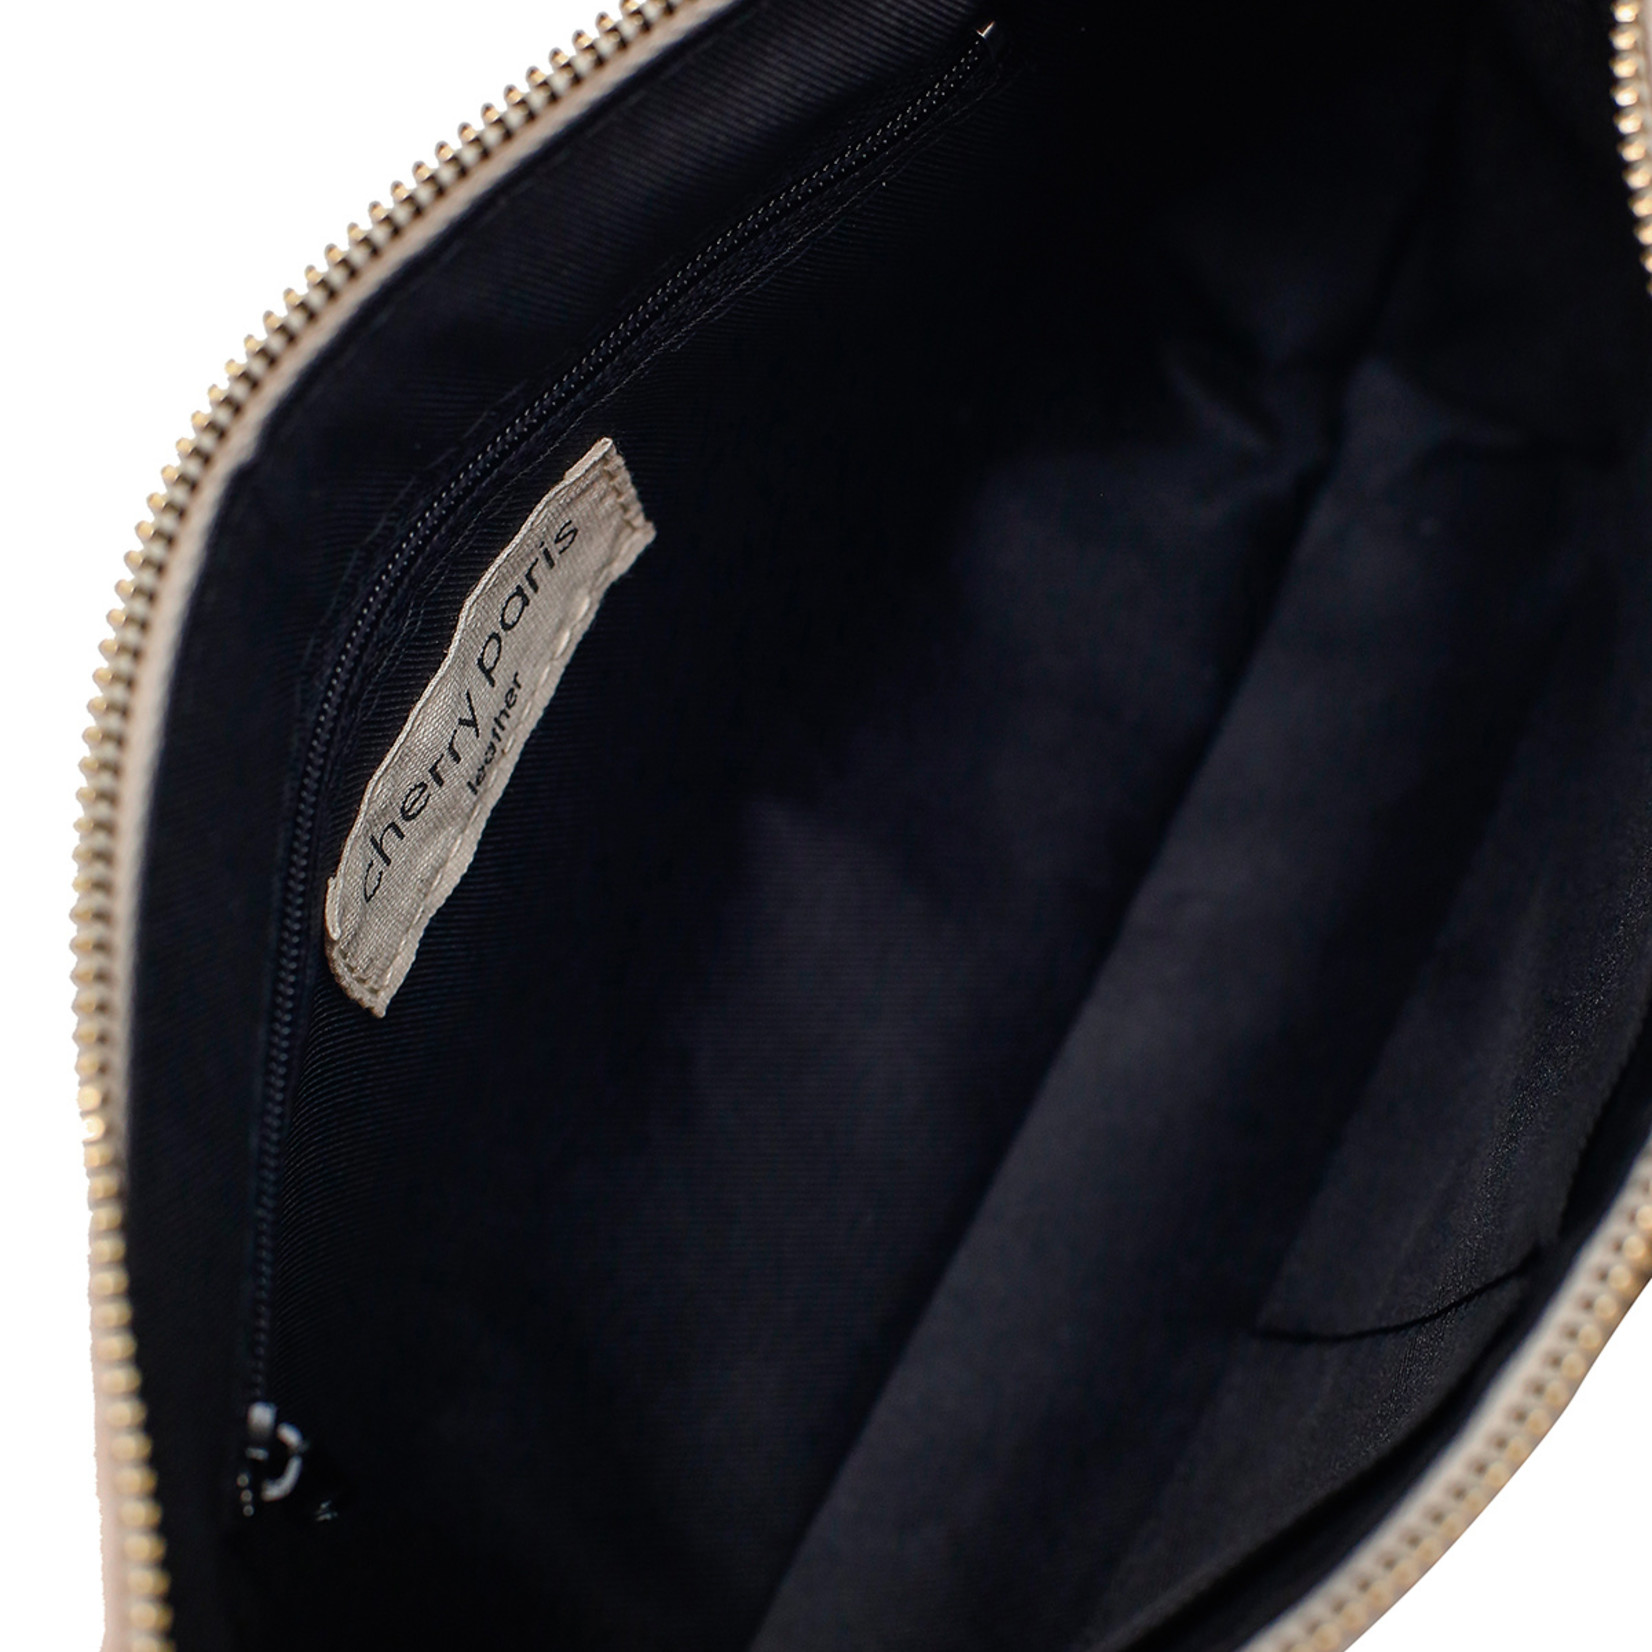 Cherry Paris Leather Handbag in cow leather croco style